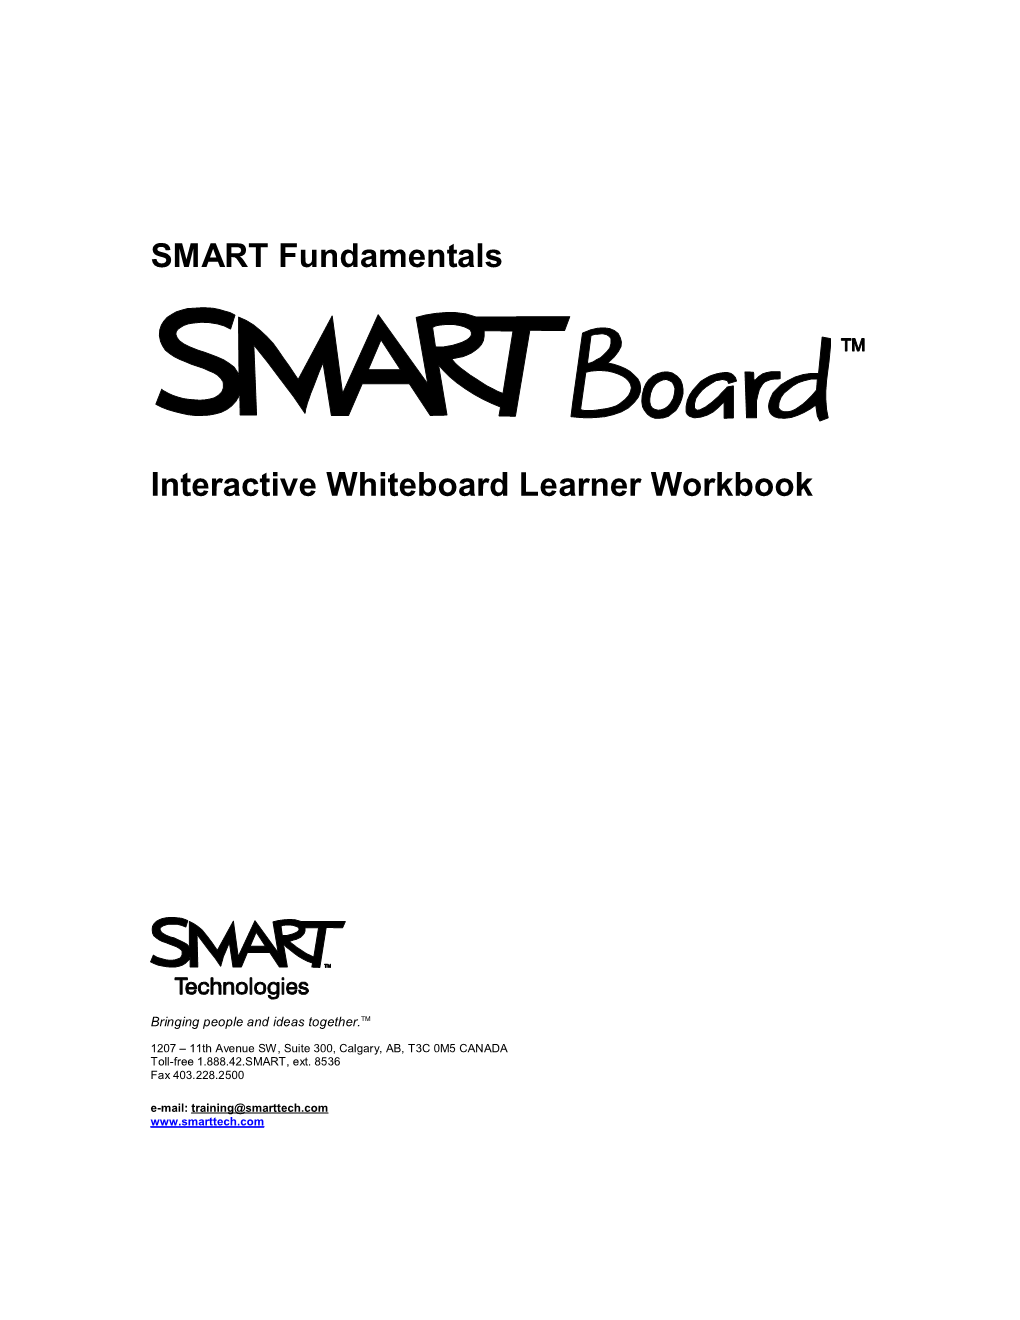 SMART Fundamentals Interactive Whiteboard Learner Workbook